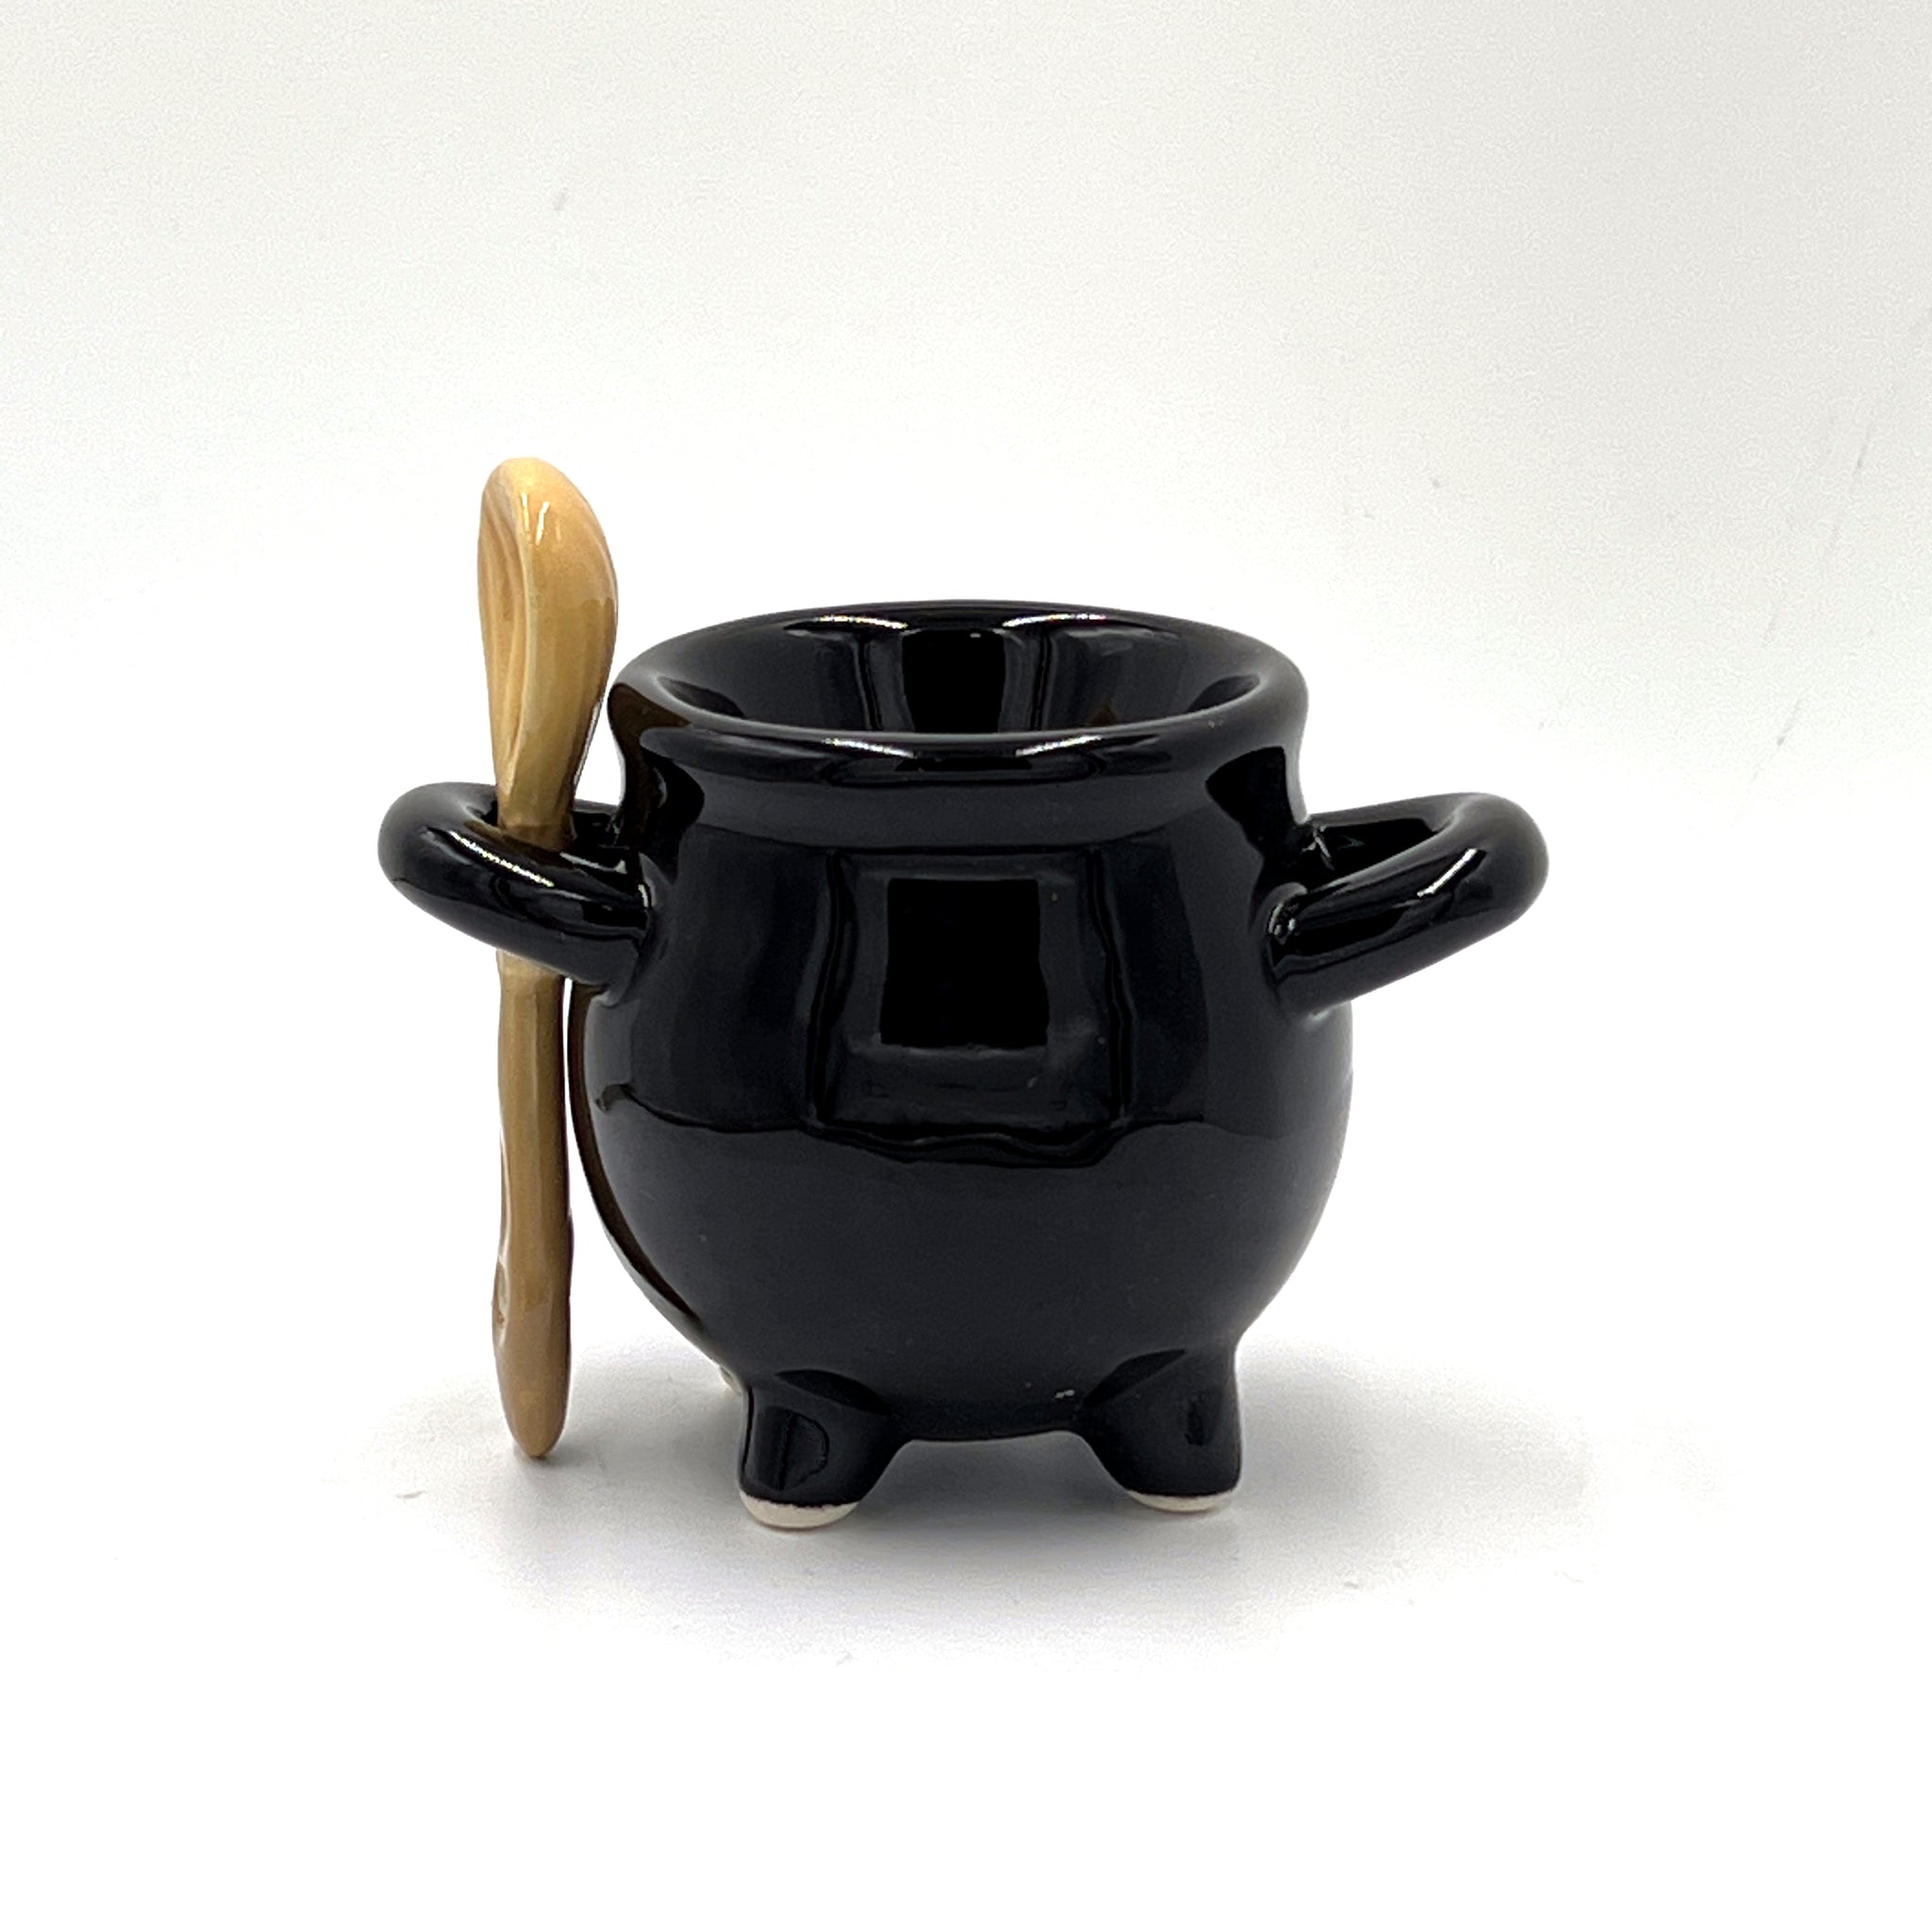 Cauldron Egg Cup with Broom Spoon